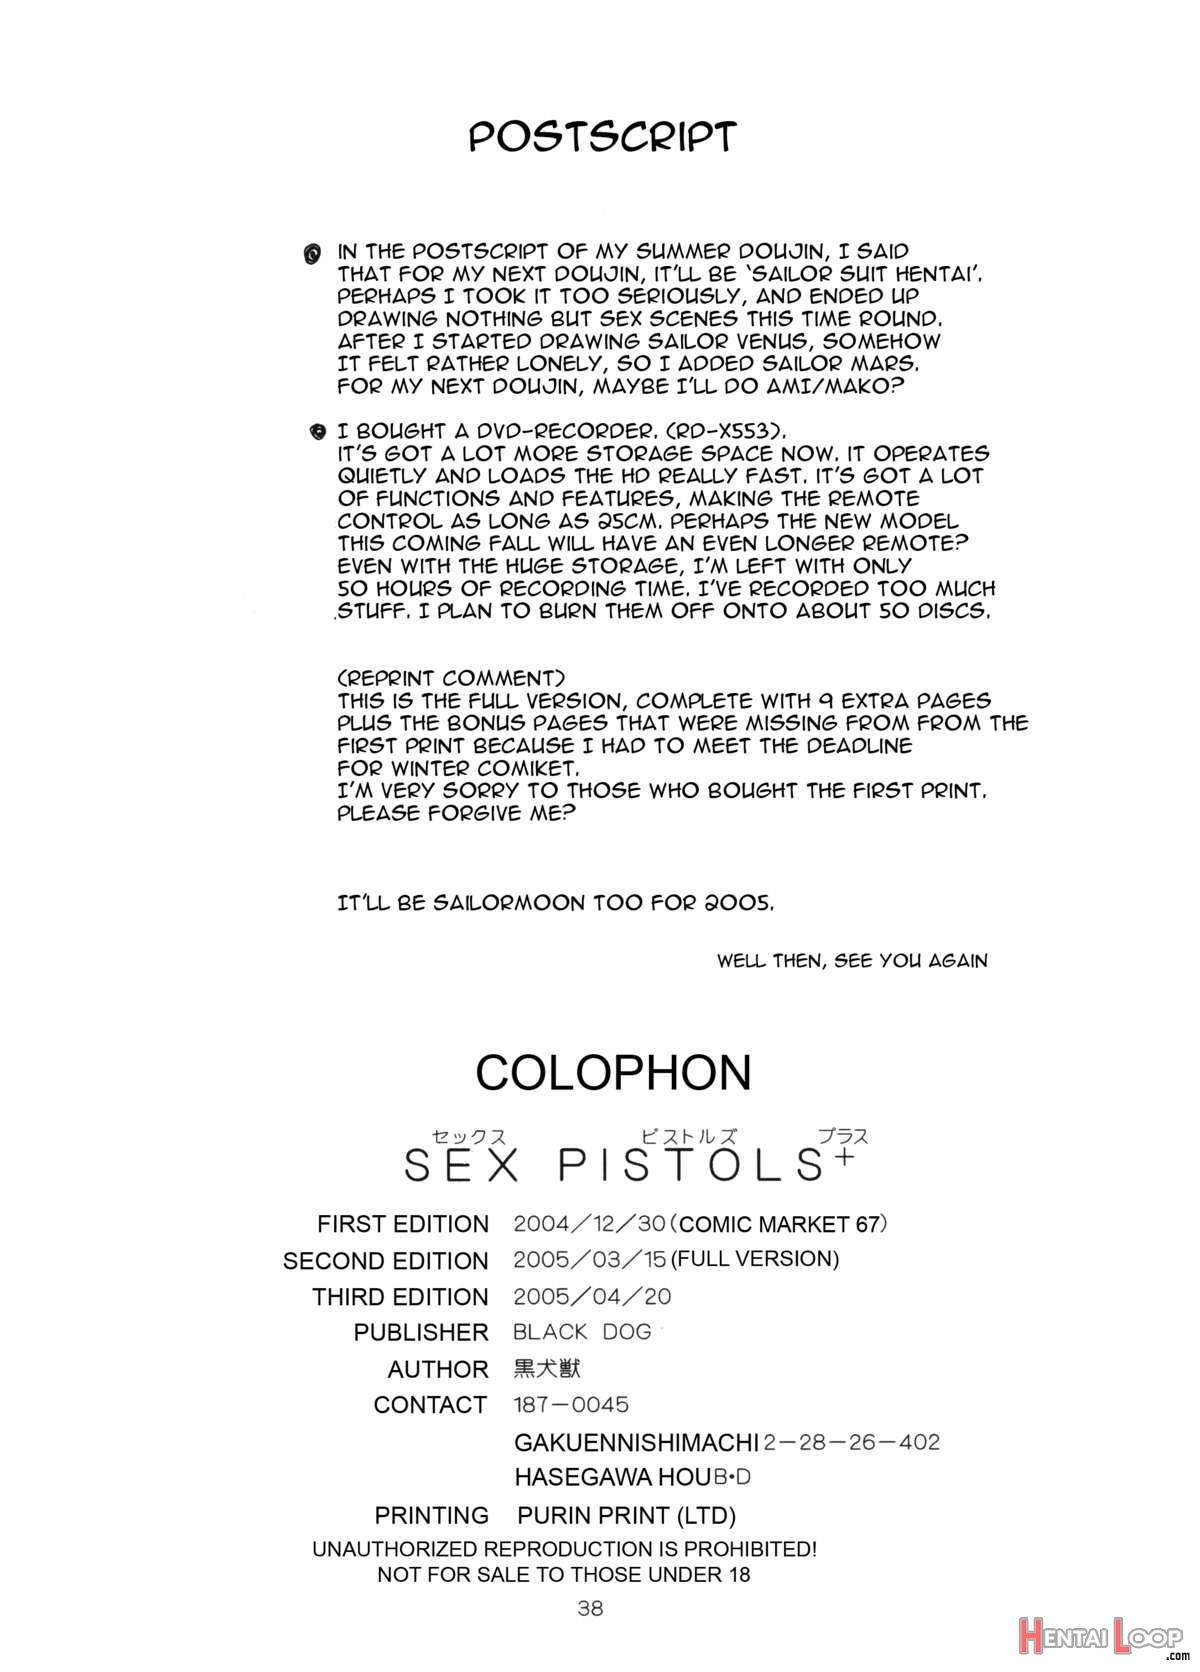 Sex Pistols+hi-res page 37